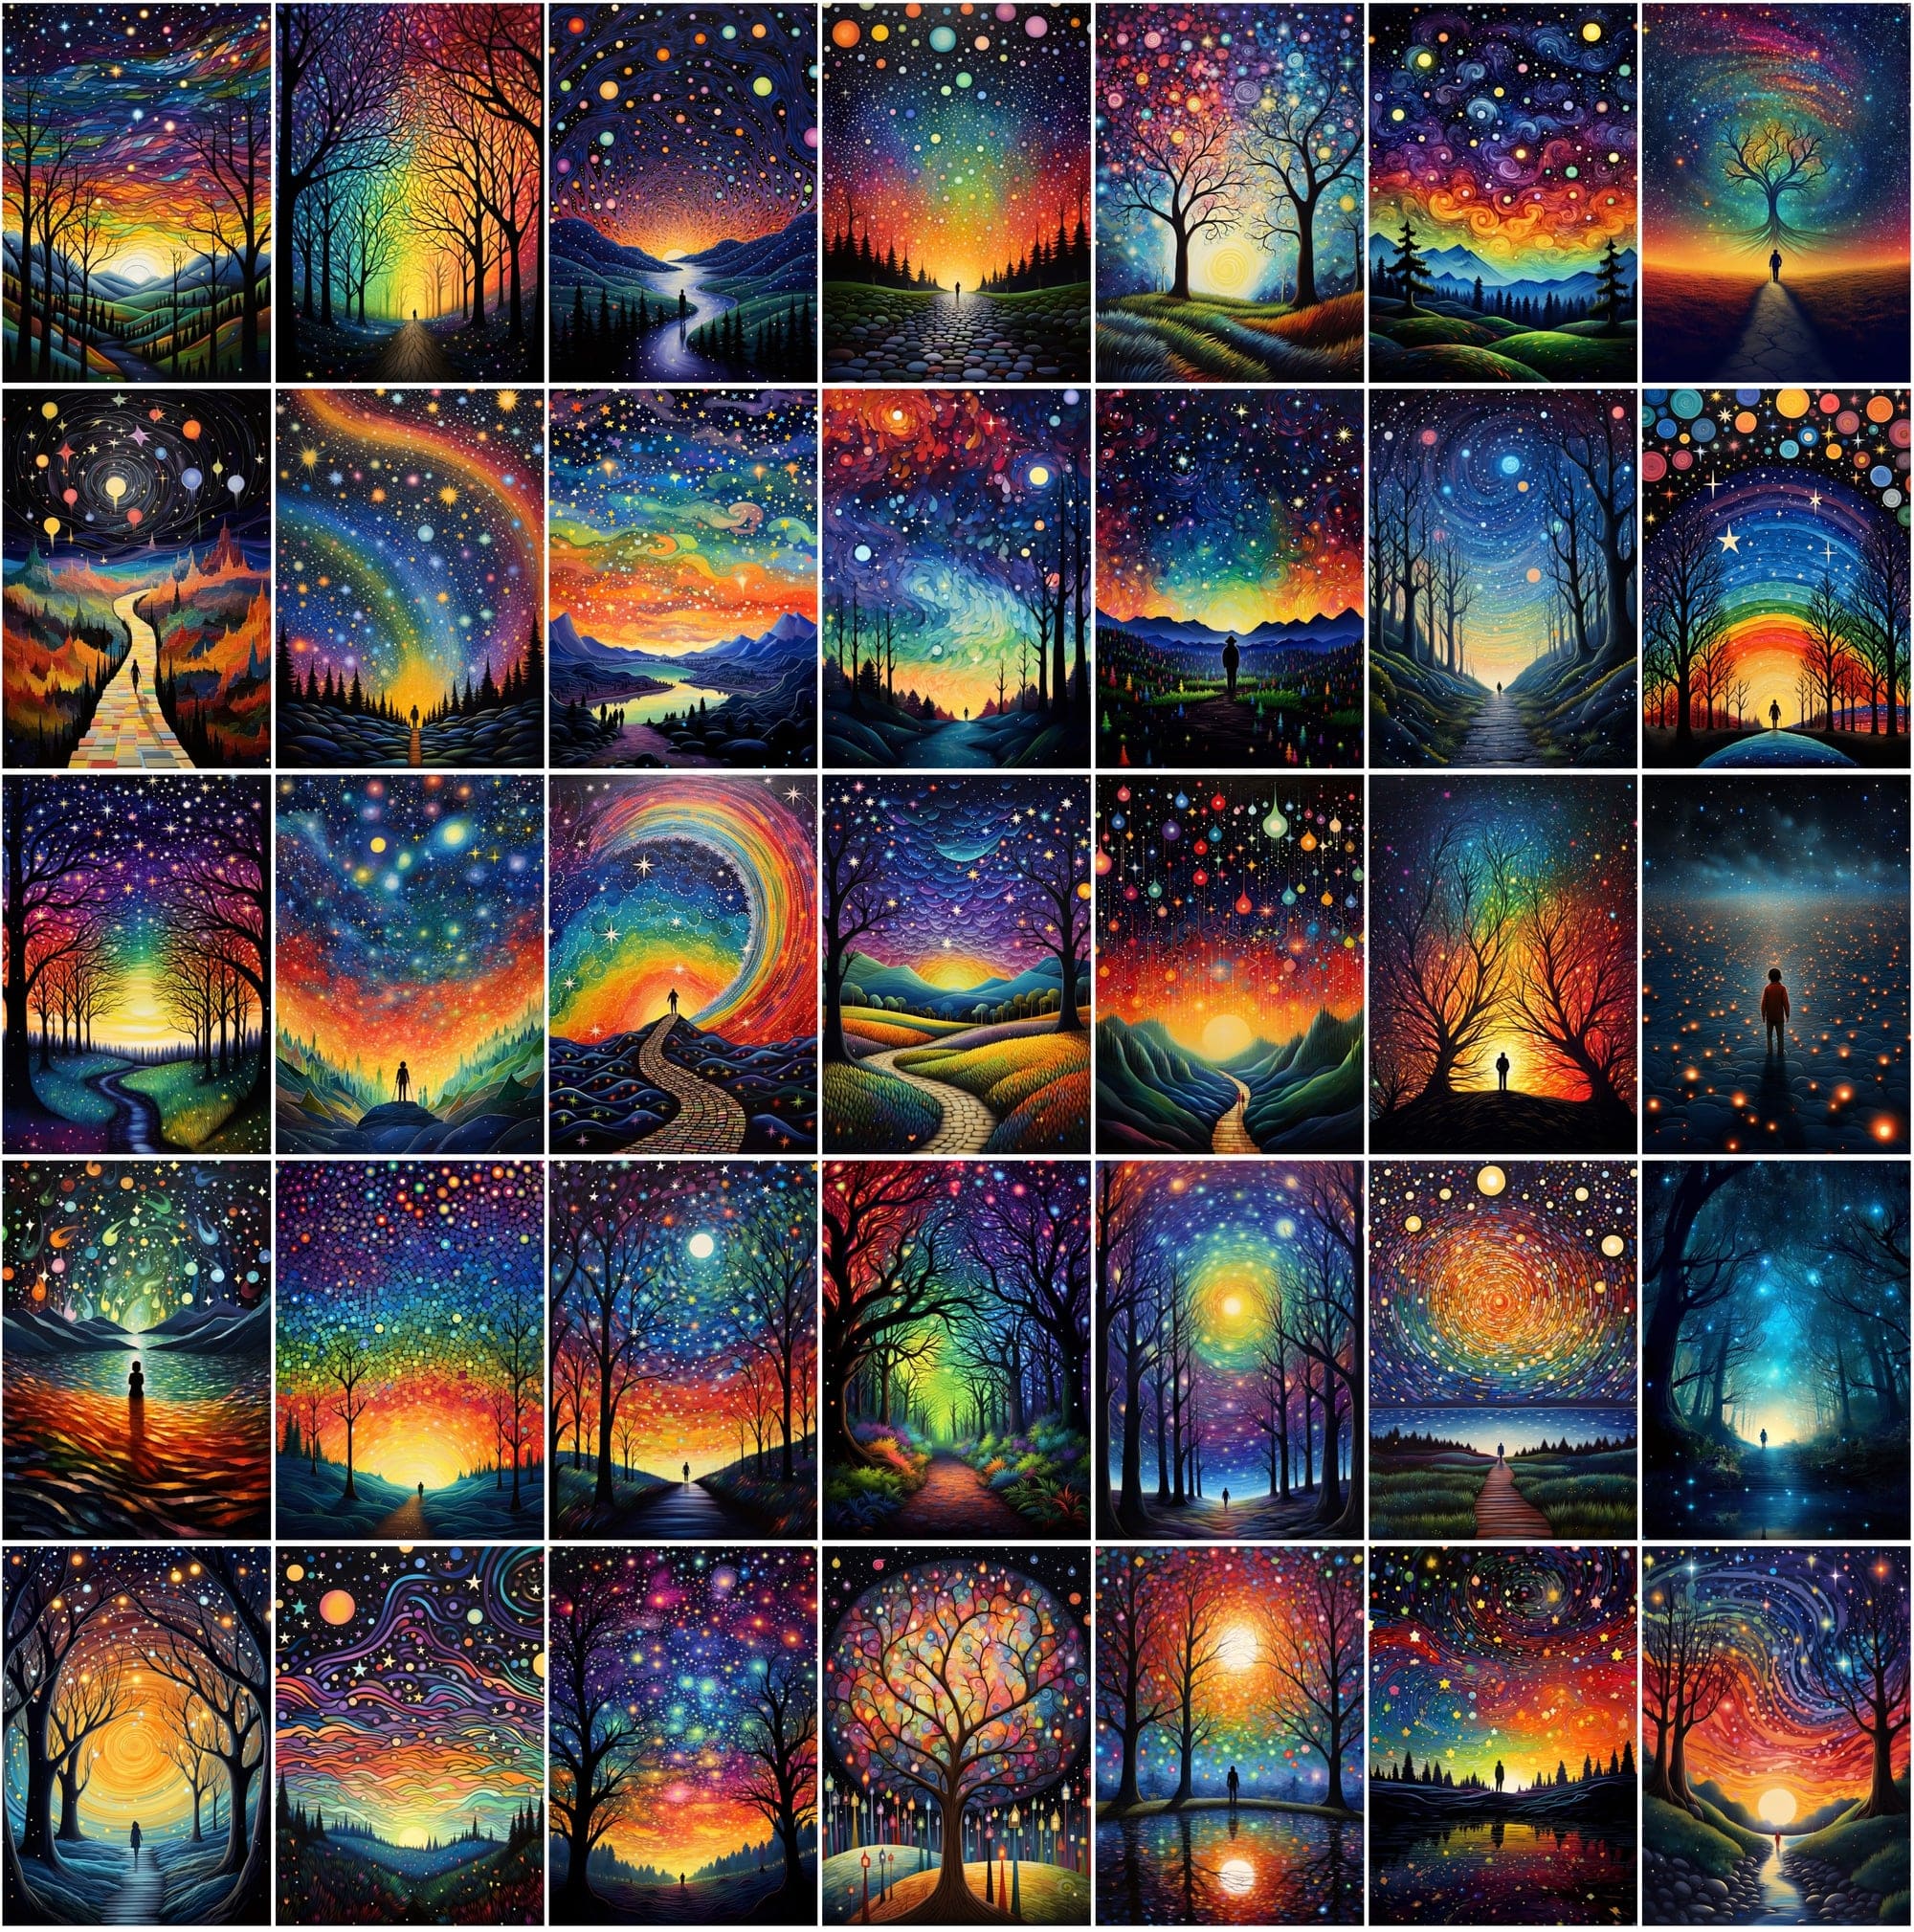 Celestial Landscape Images Bundle, Colorful Starry Night Sky Photos, High-Resolution Digital Art with Commercial License Digital Download Sumobundle